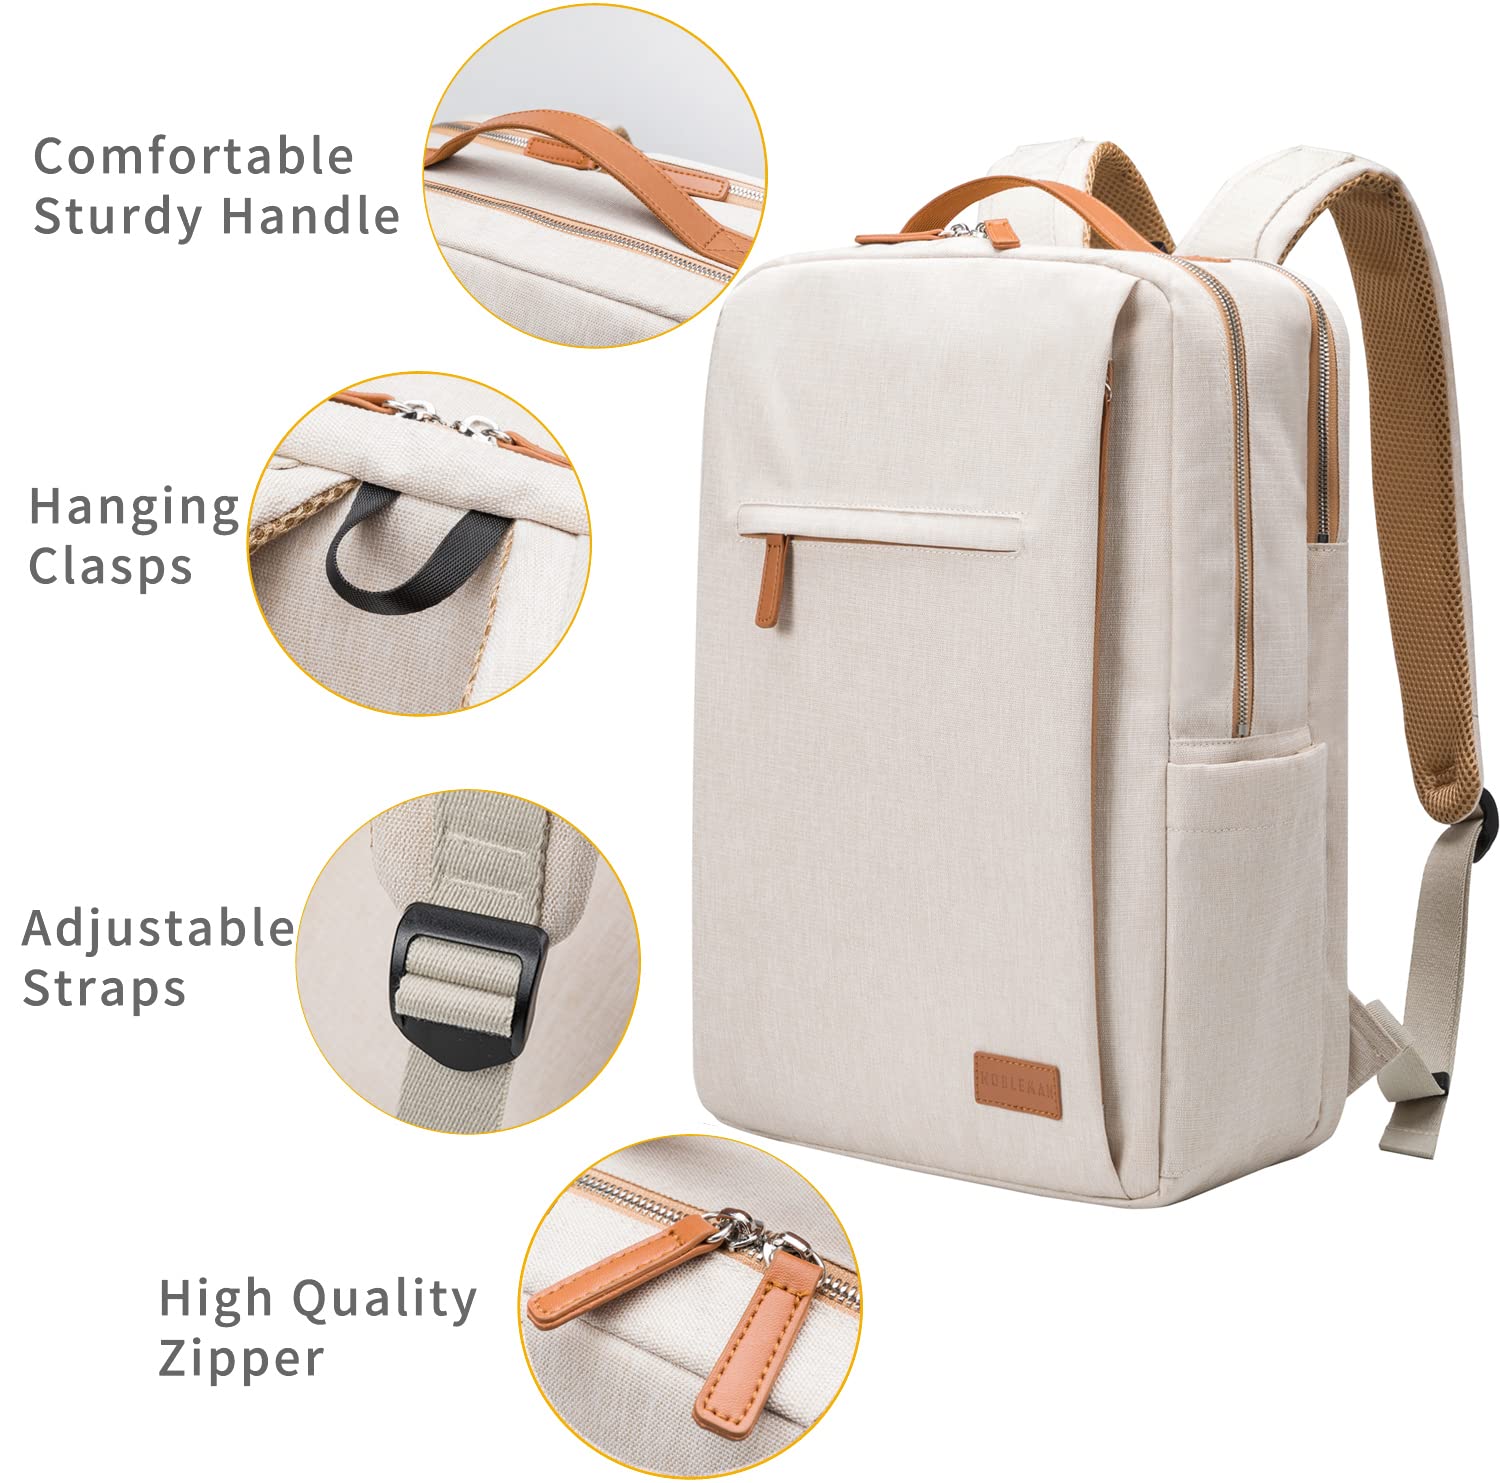 NOBLEMAN Men's Backpack, Laptop Backpack, Waterproof travel Backpack, 15.6 Inch Laptop Backpack, Daypack, carry on backpack with USB (Beige)